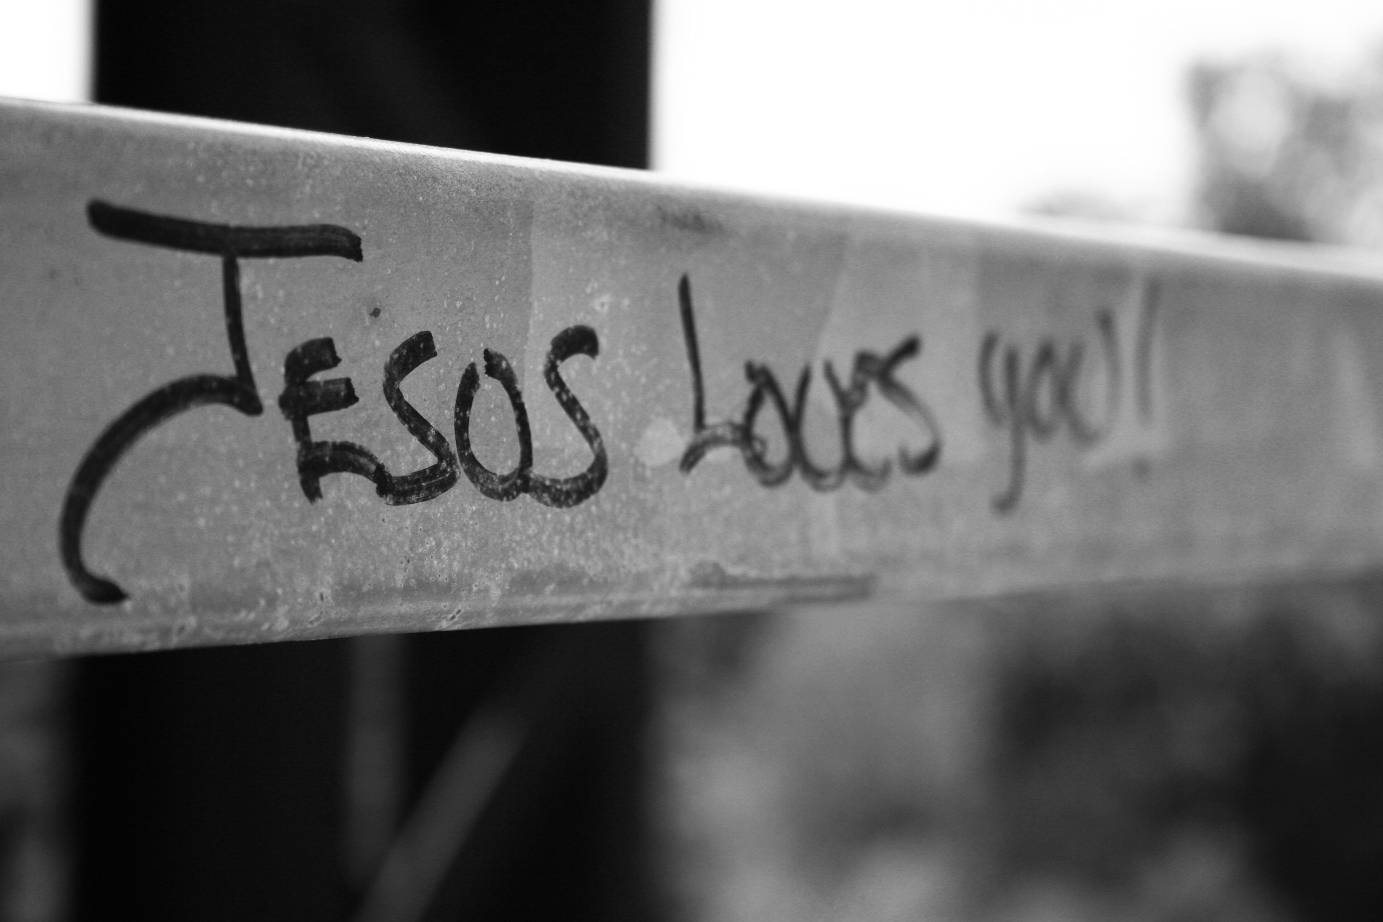 Jesus Loves You Wallpaper